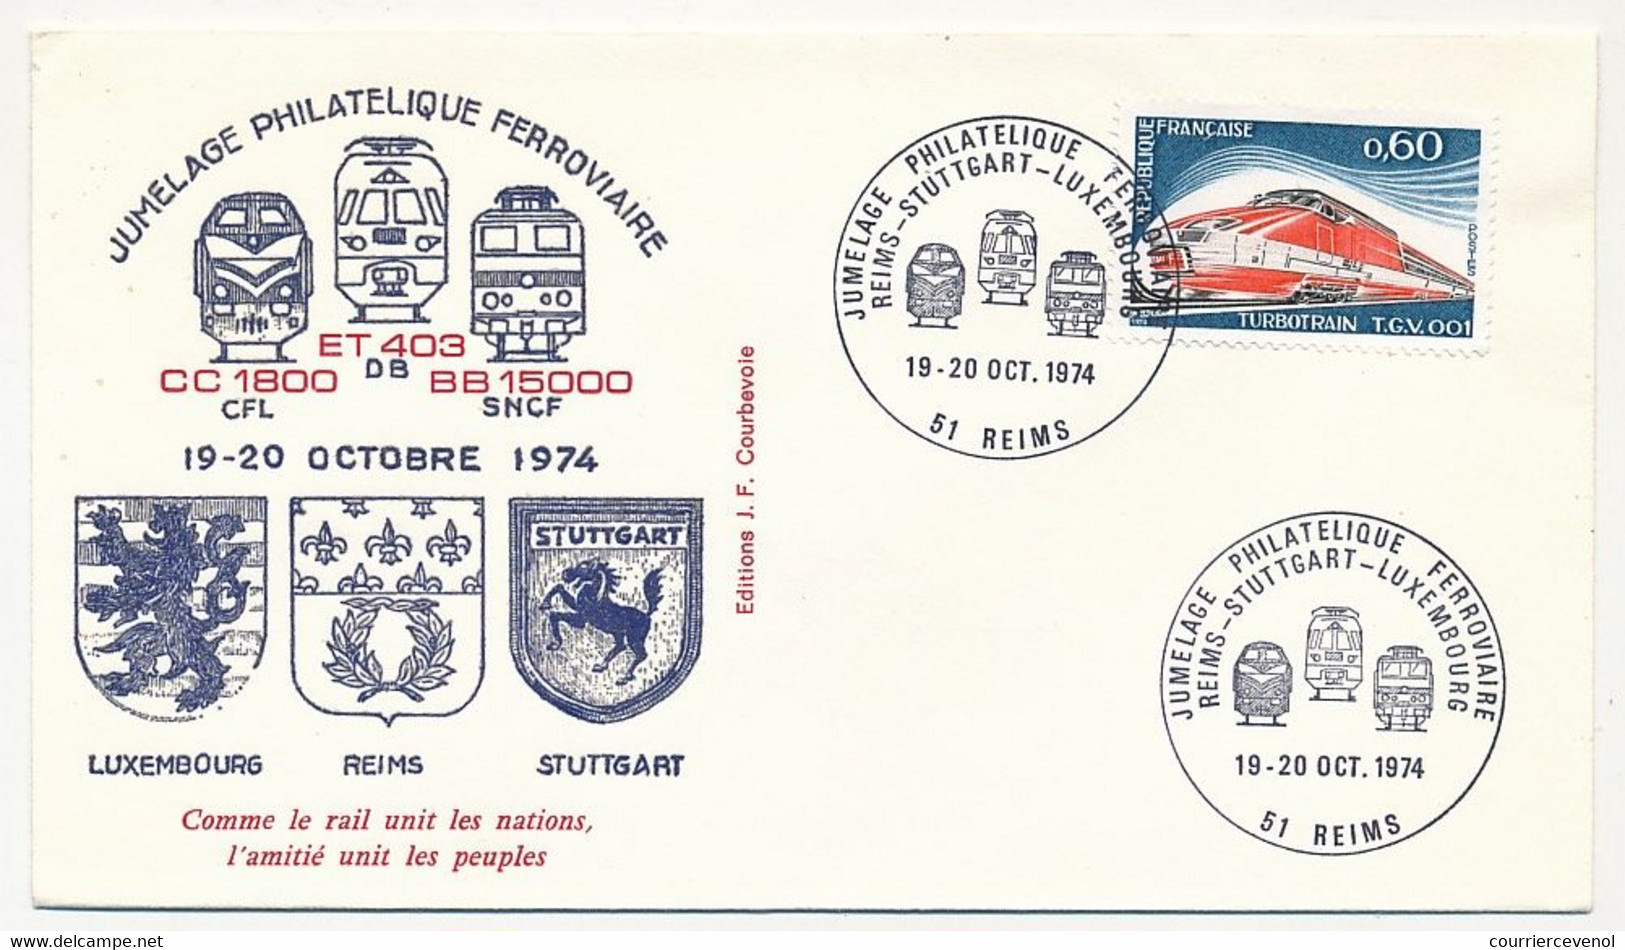 FRANCE - Jumelage Philatélique Ferroviaire Reims, Stuttgart, Luxembourg - REIMS 19-20/Oct/1974 - Eisenbahnen